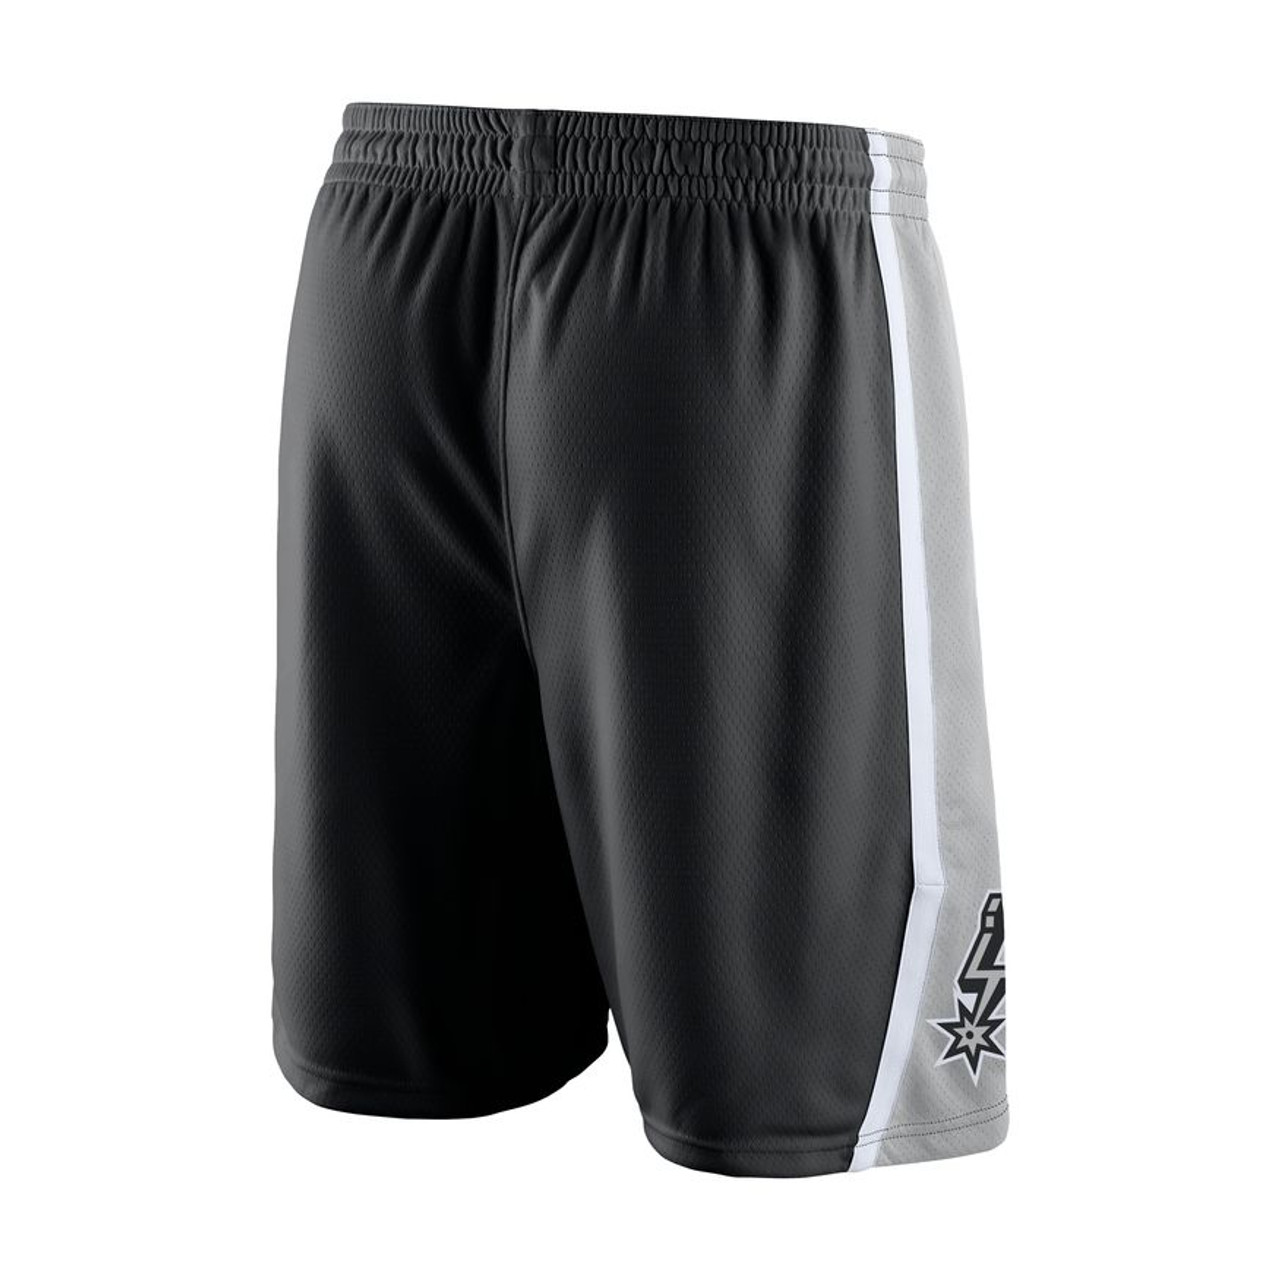 San Antonio Spurs Men's Nike Icon Basketball Shorts - Black - The ...